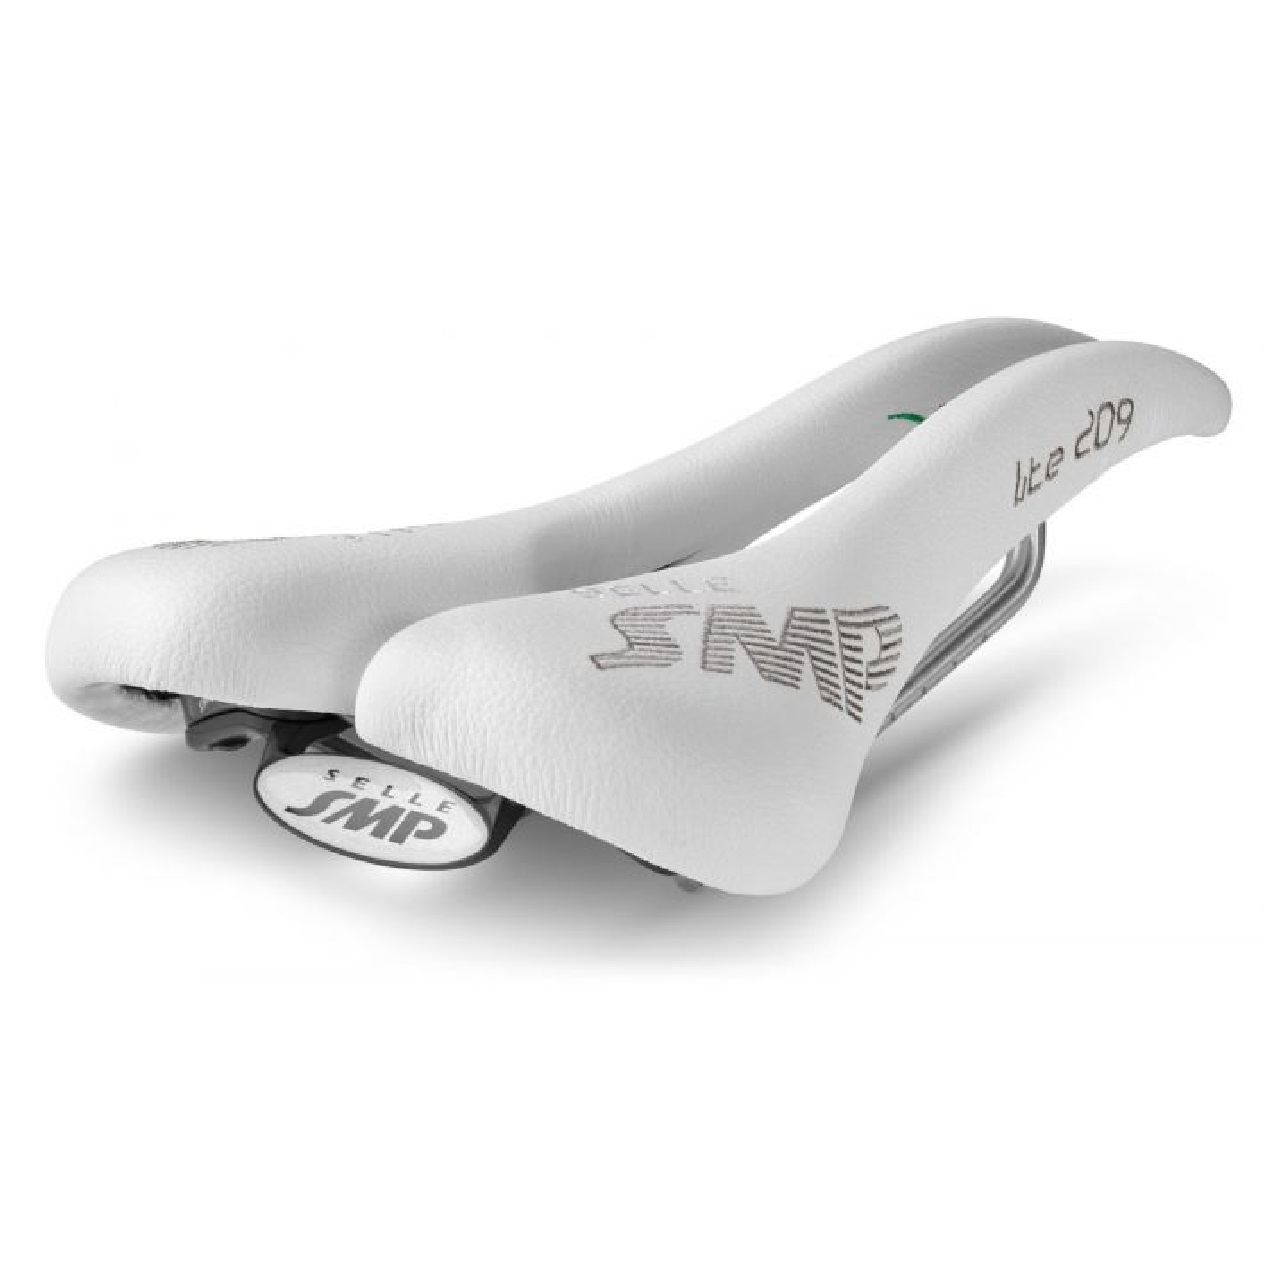 Selle SMP Lite 209 Pro Bike Saddle Bike Seat White